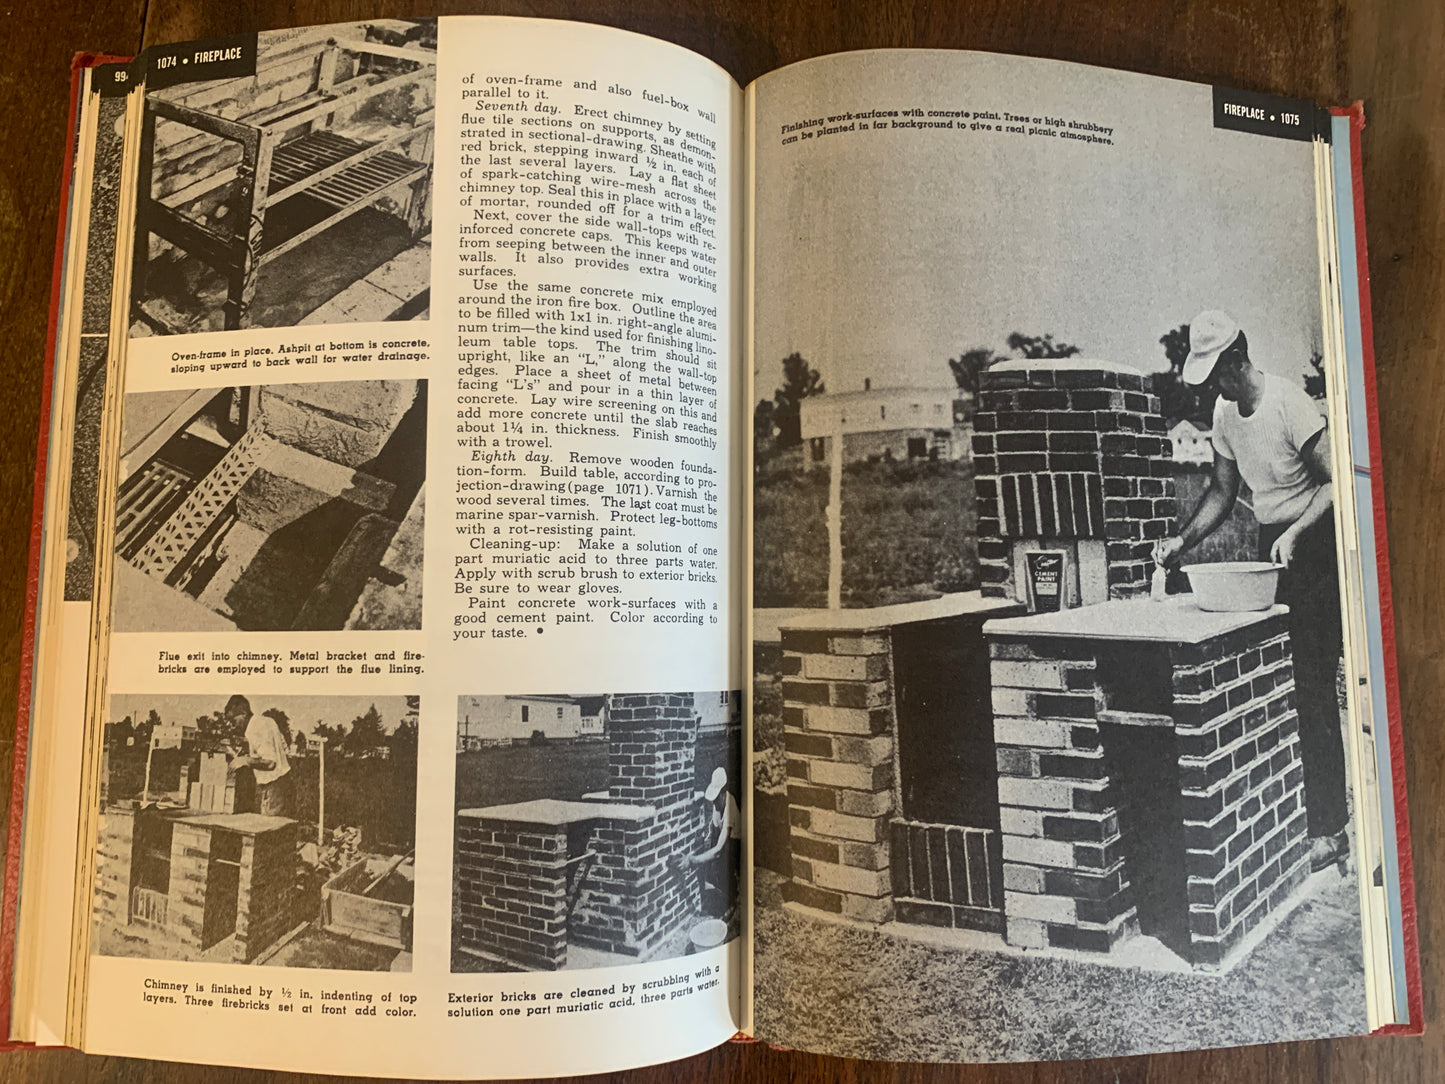 The Practical Handyman's Encyclopedia Volume 6 - 1963